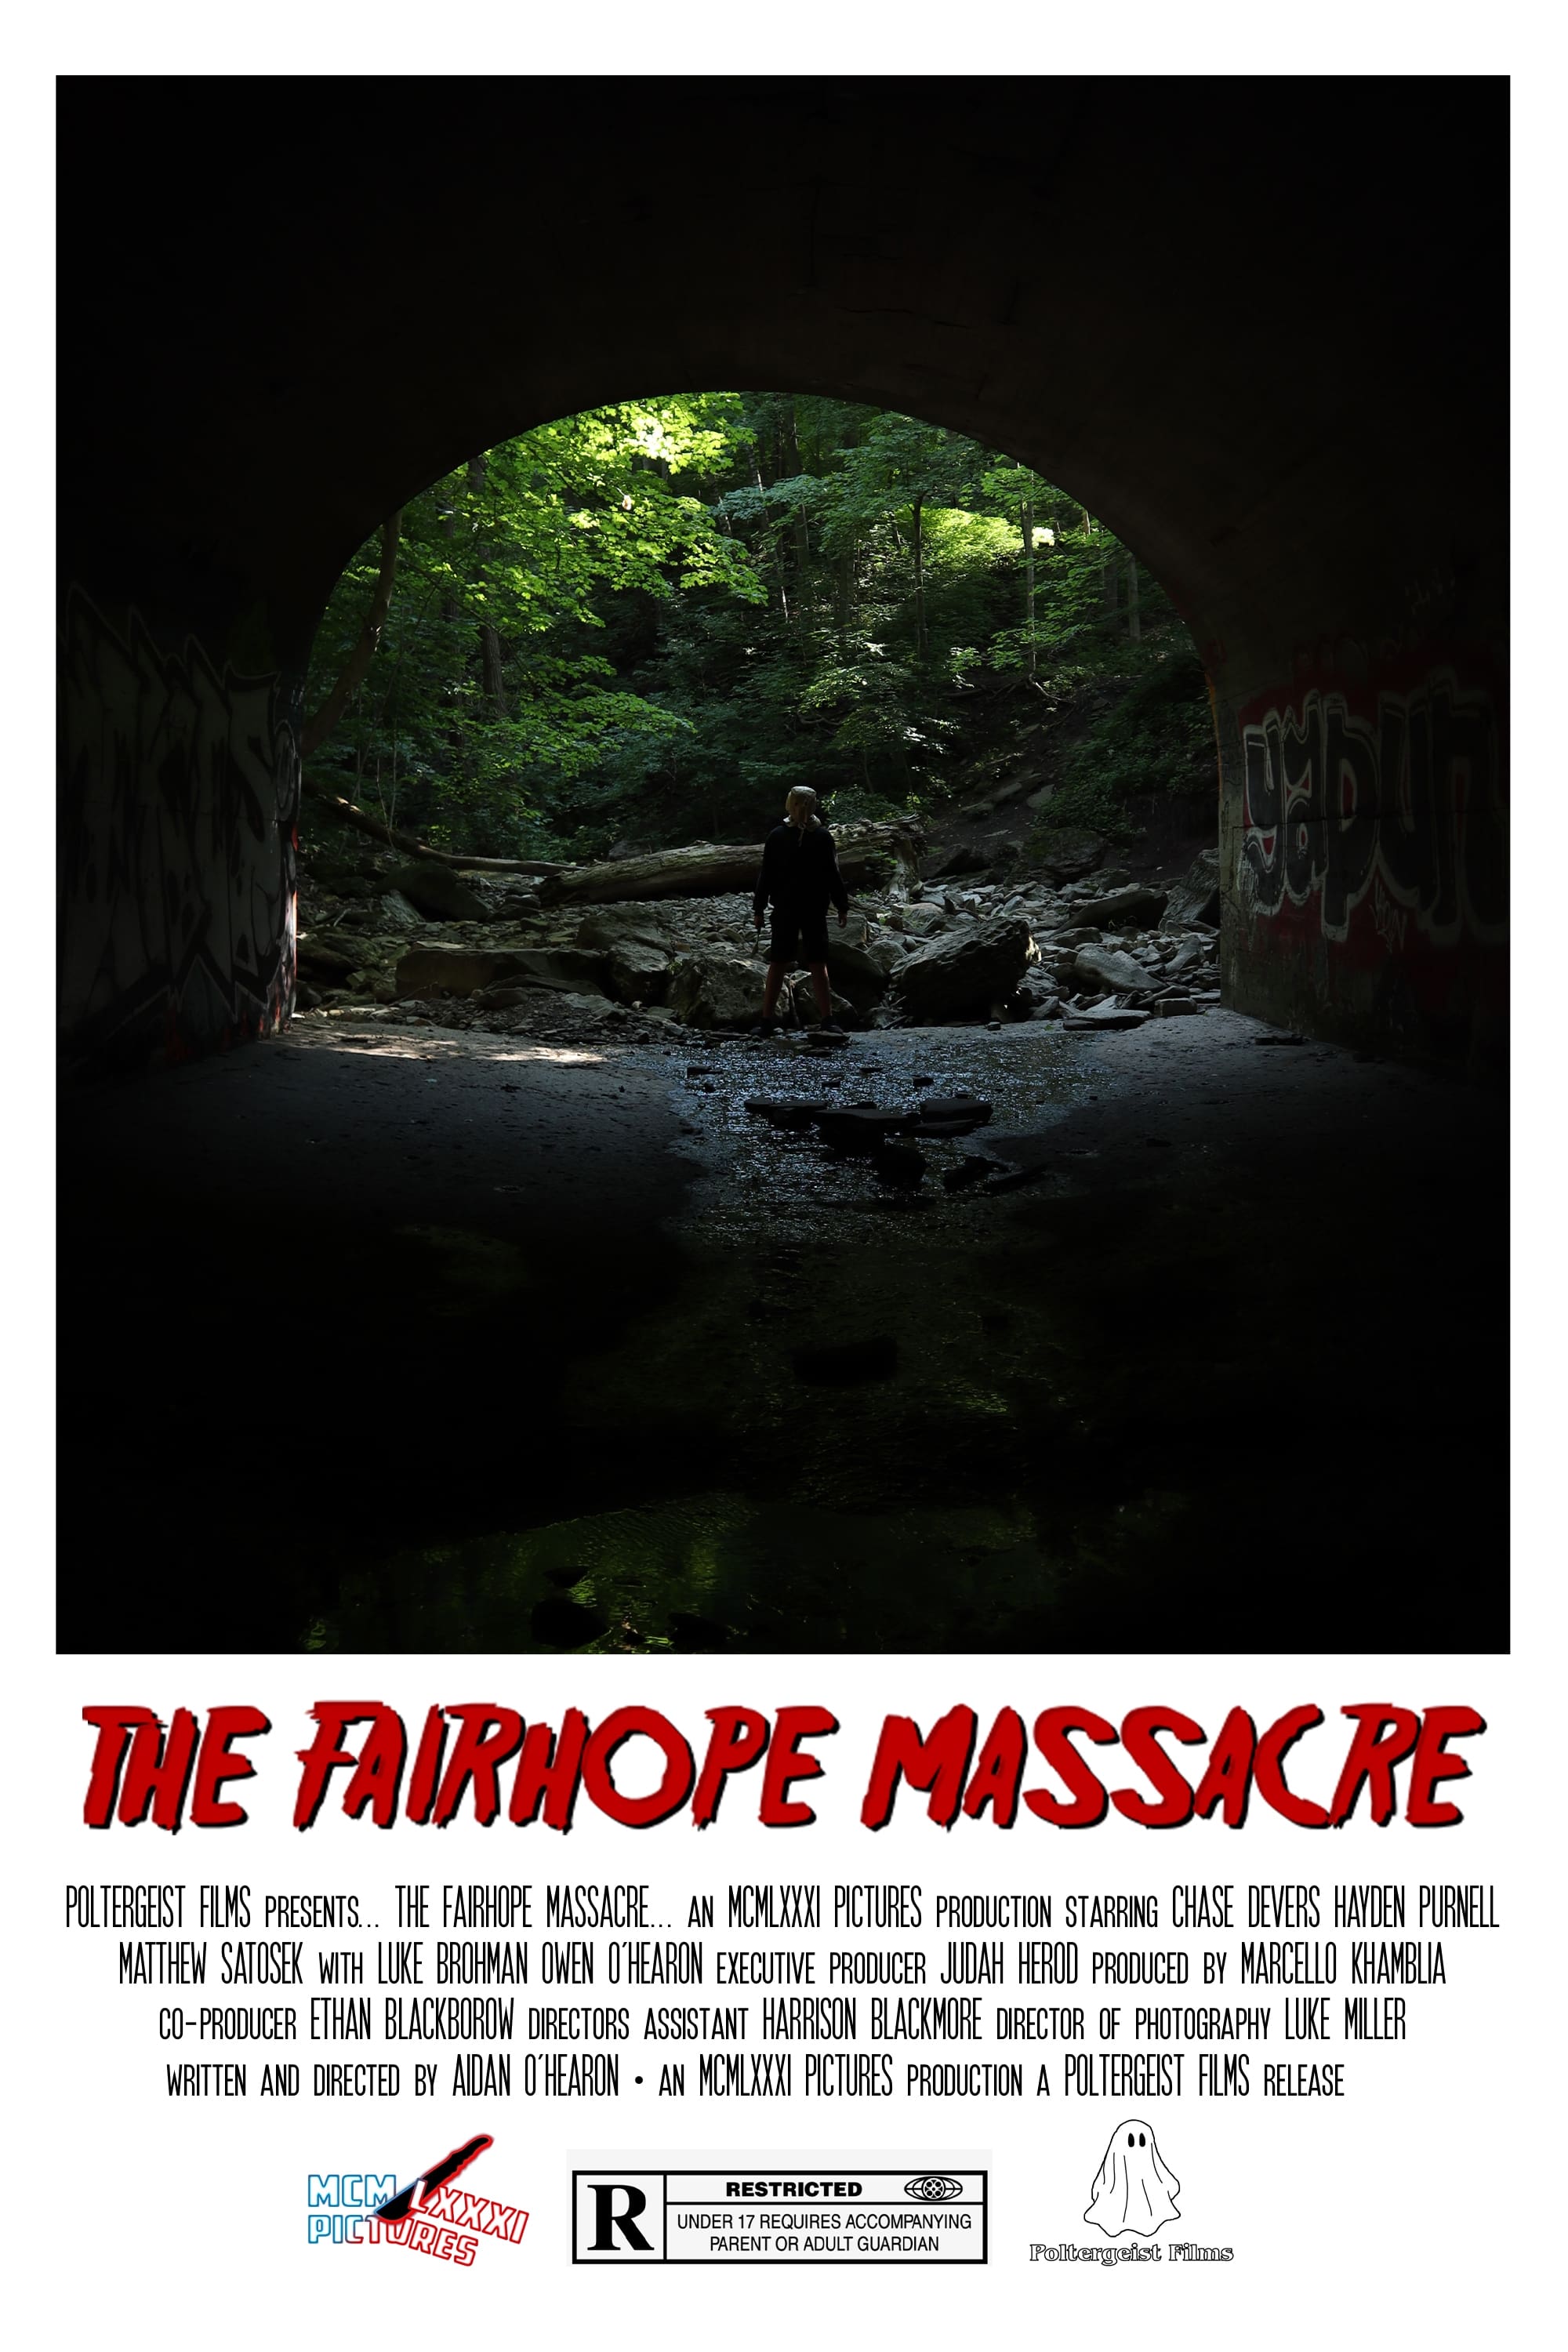 The Fairhope Massacre